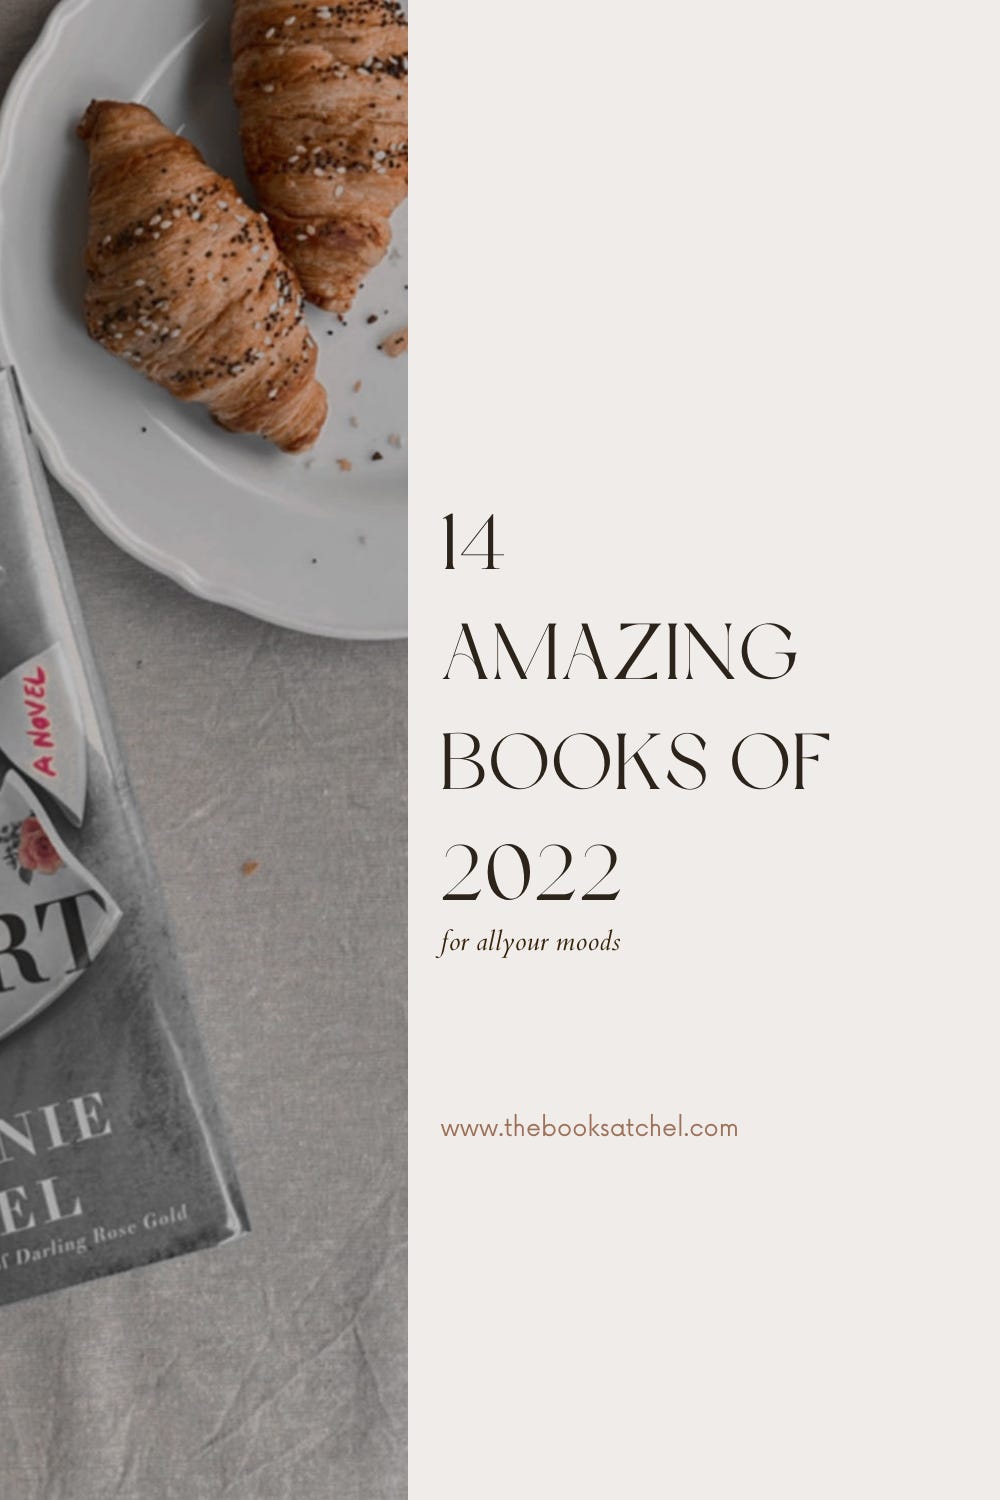 Amazing books of 2022 : Book list